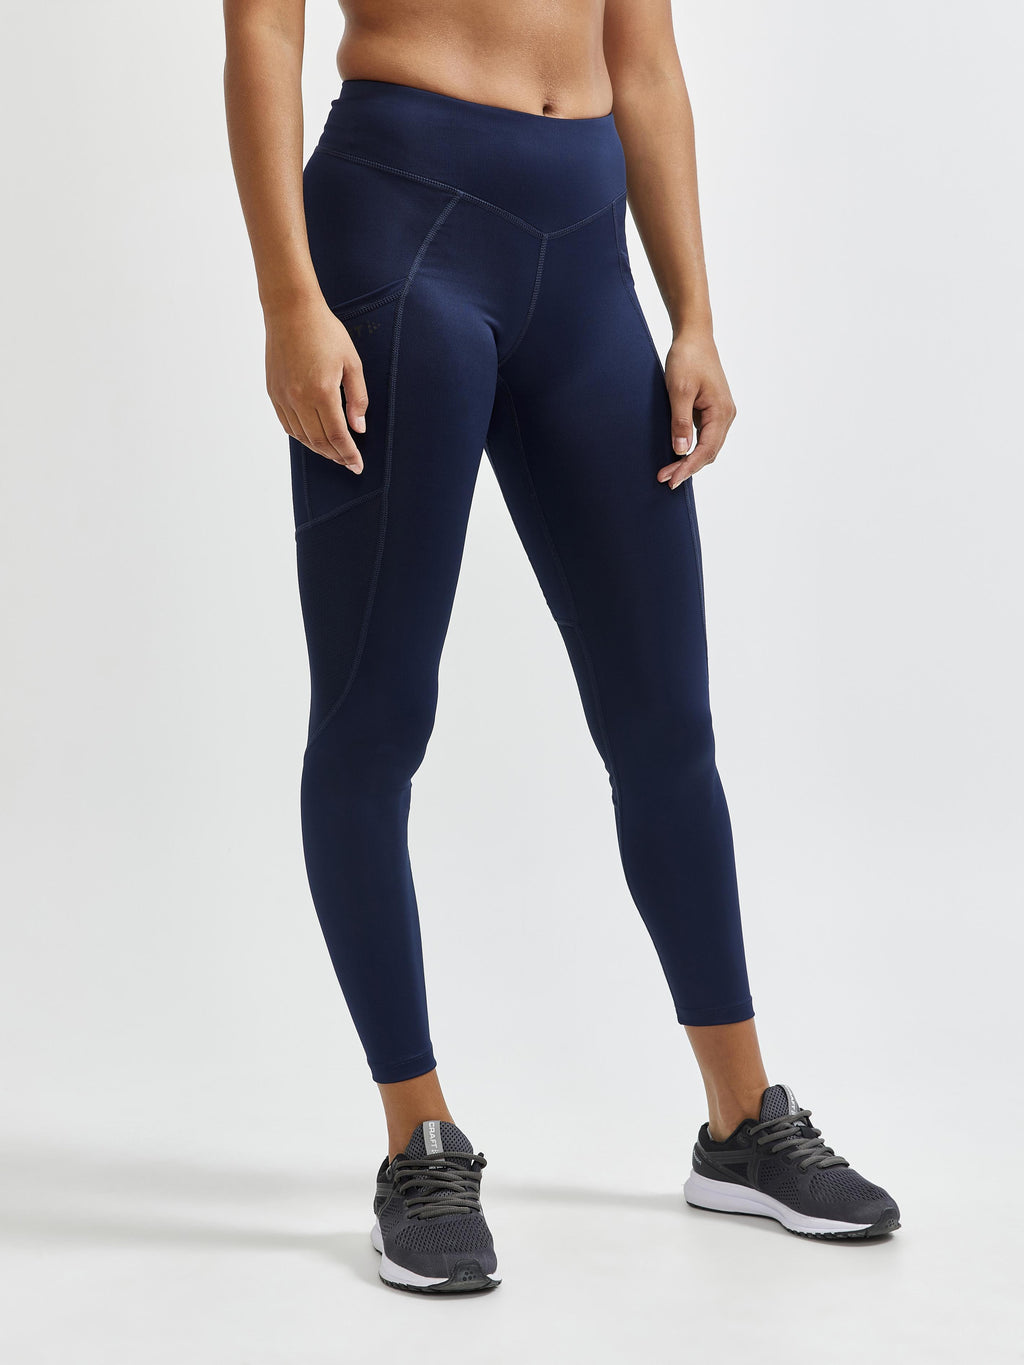 Women's Workout Tights & Sports Leggings | Craft Sportswear USA